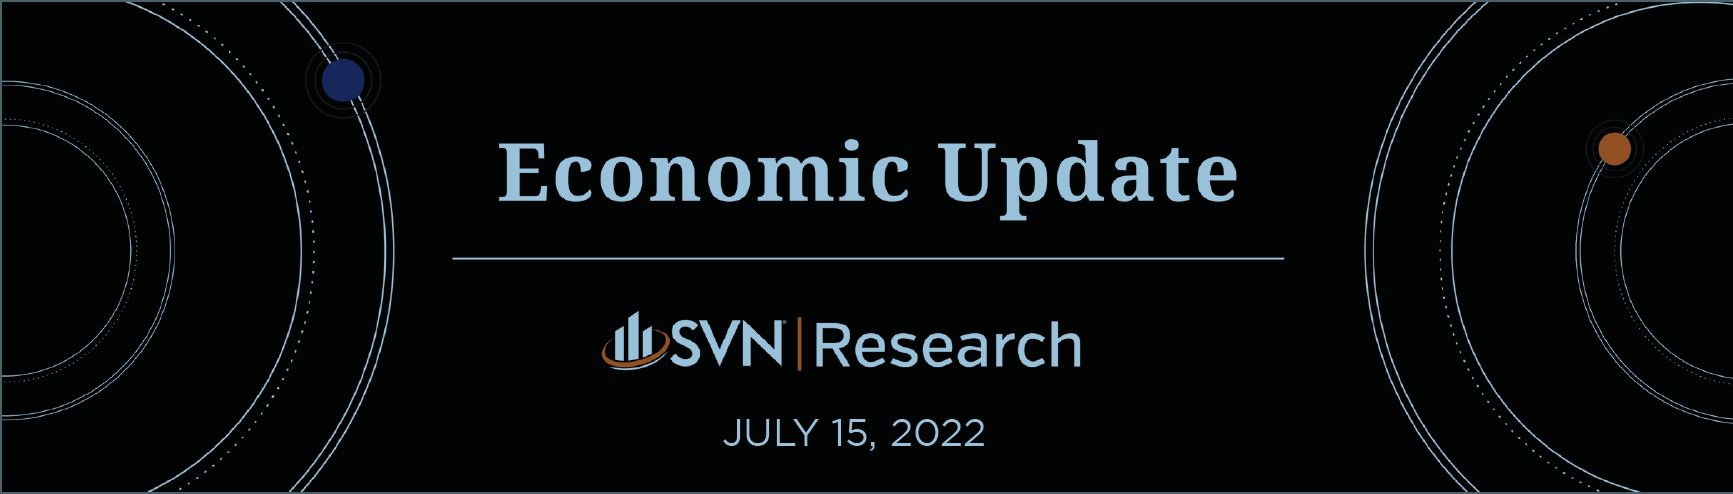 SVN | Research Economic Update 7.15.2022